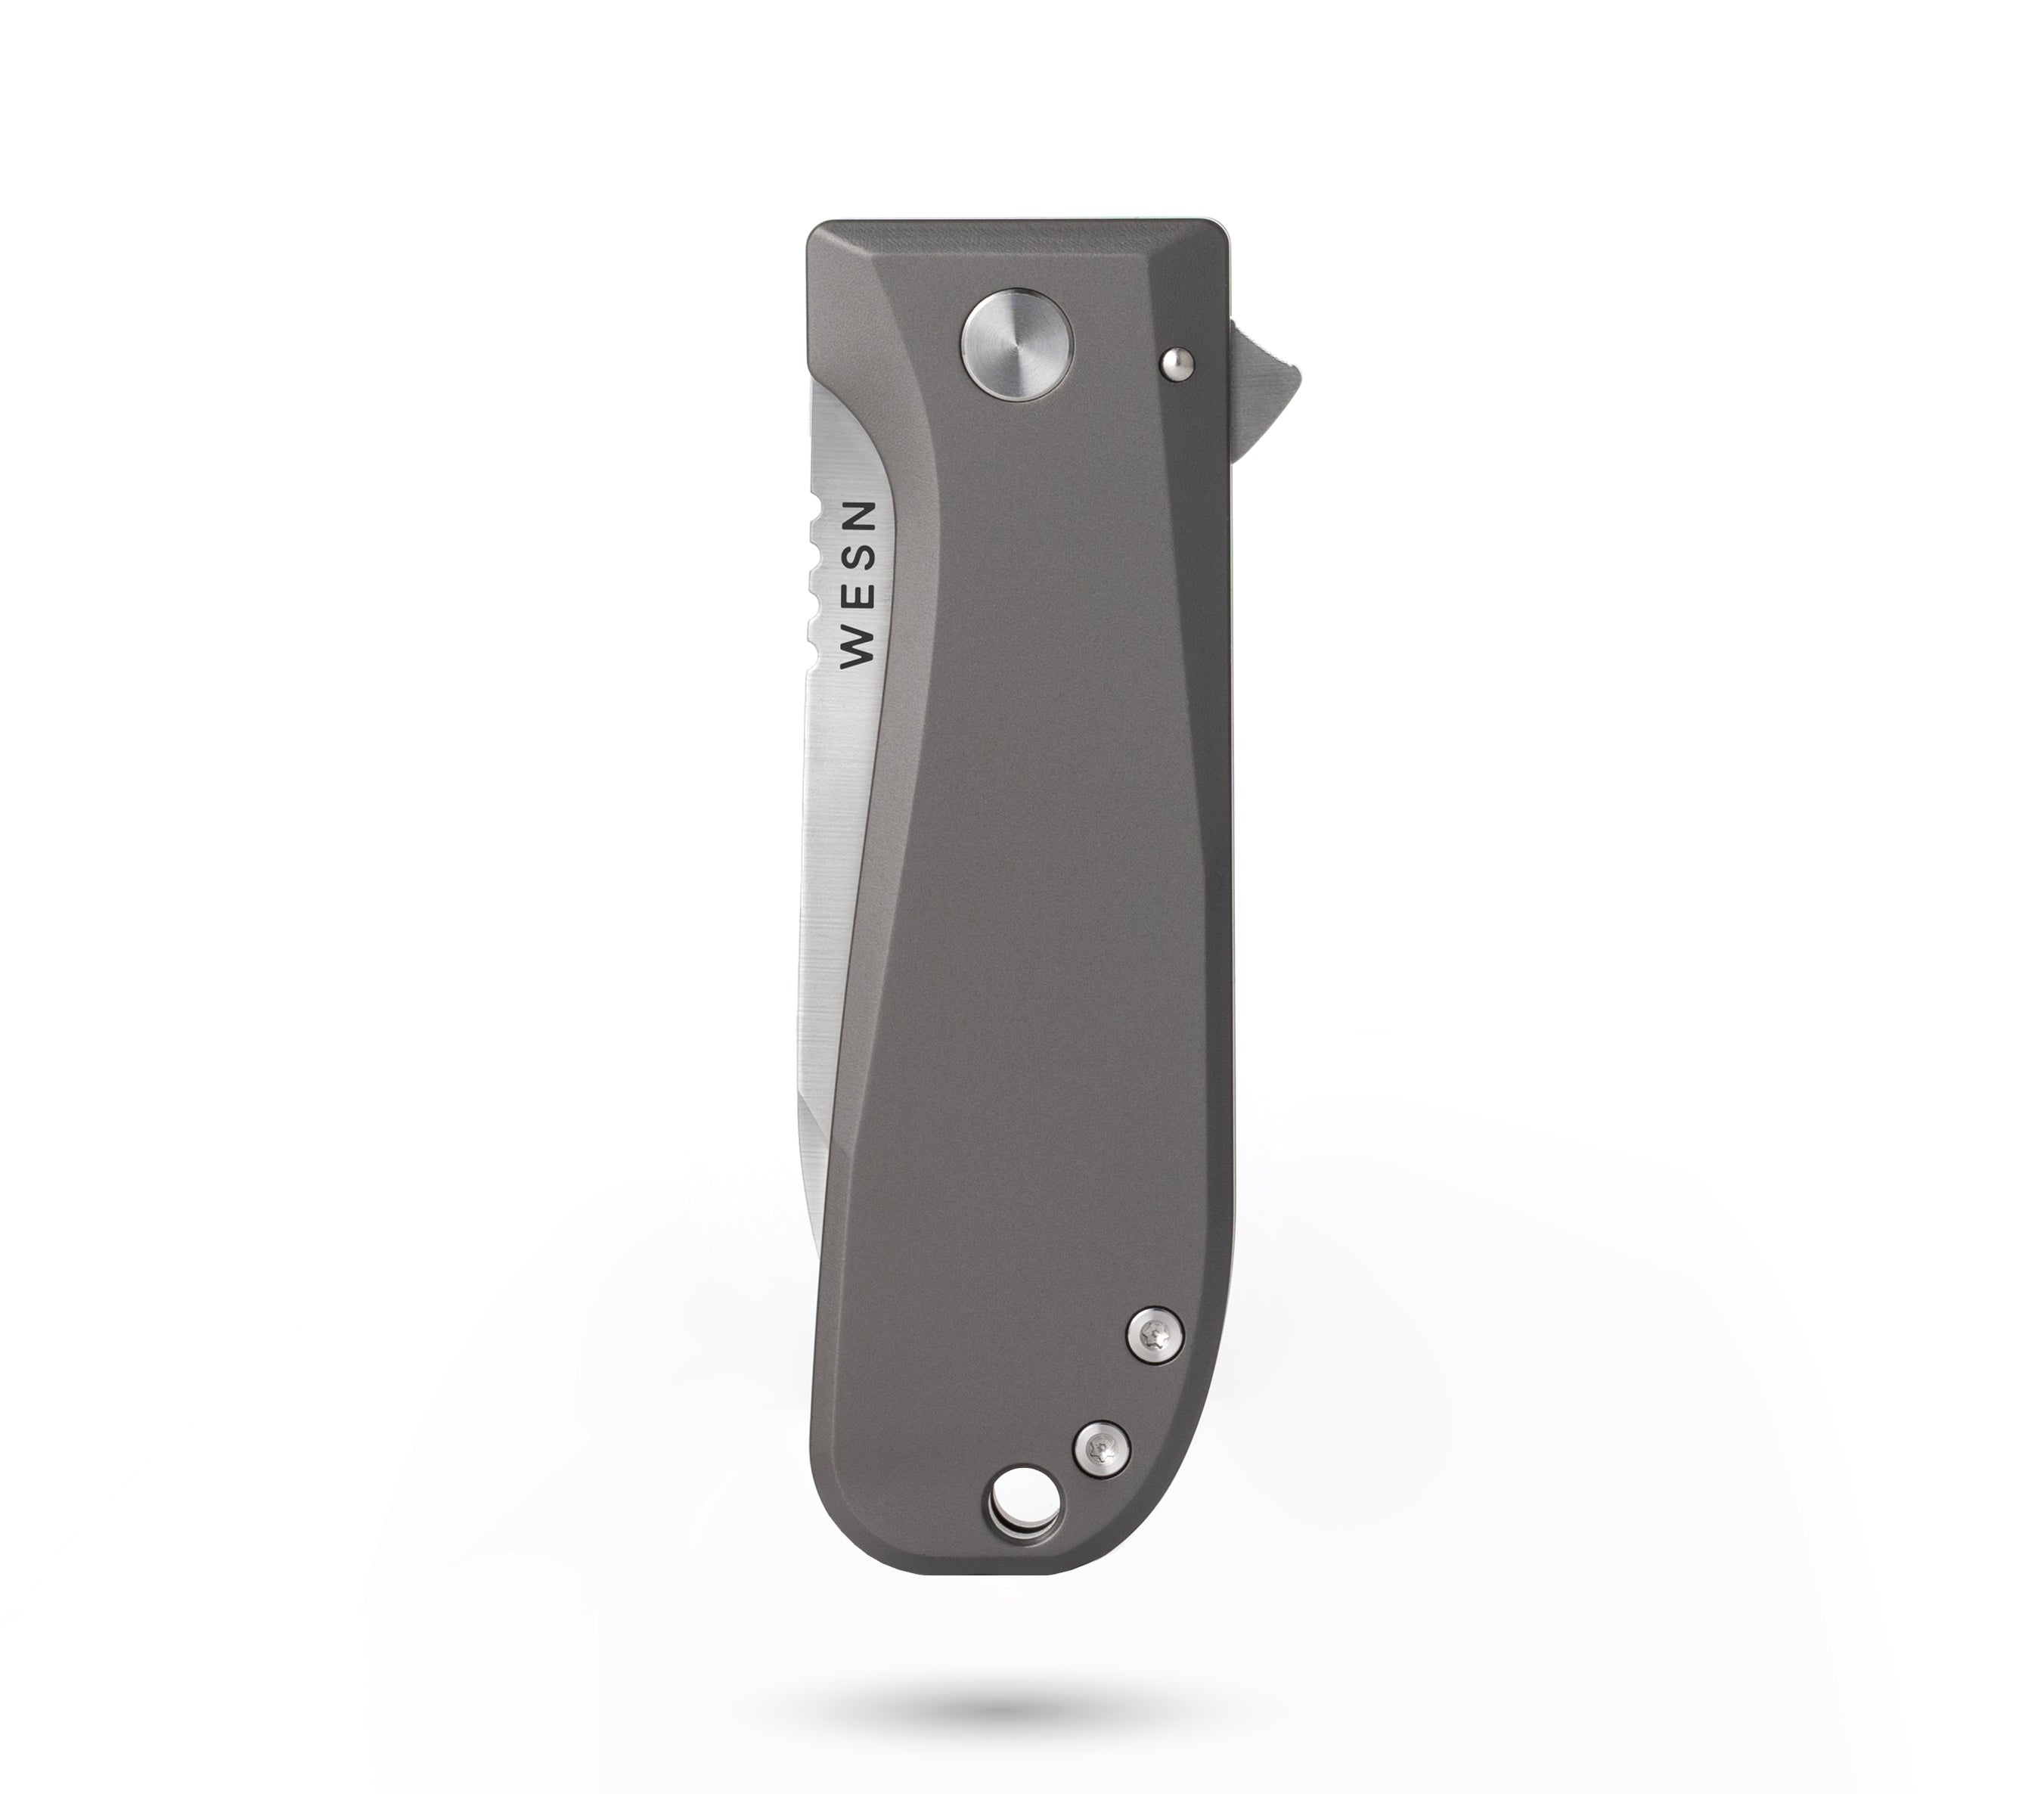 The Allman Pocket Knife – WESN